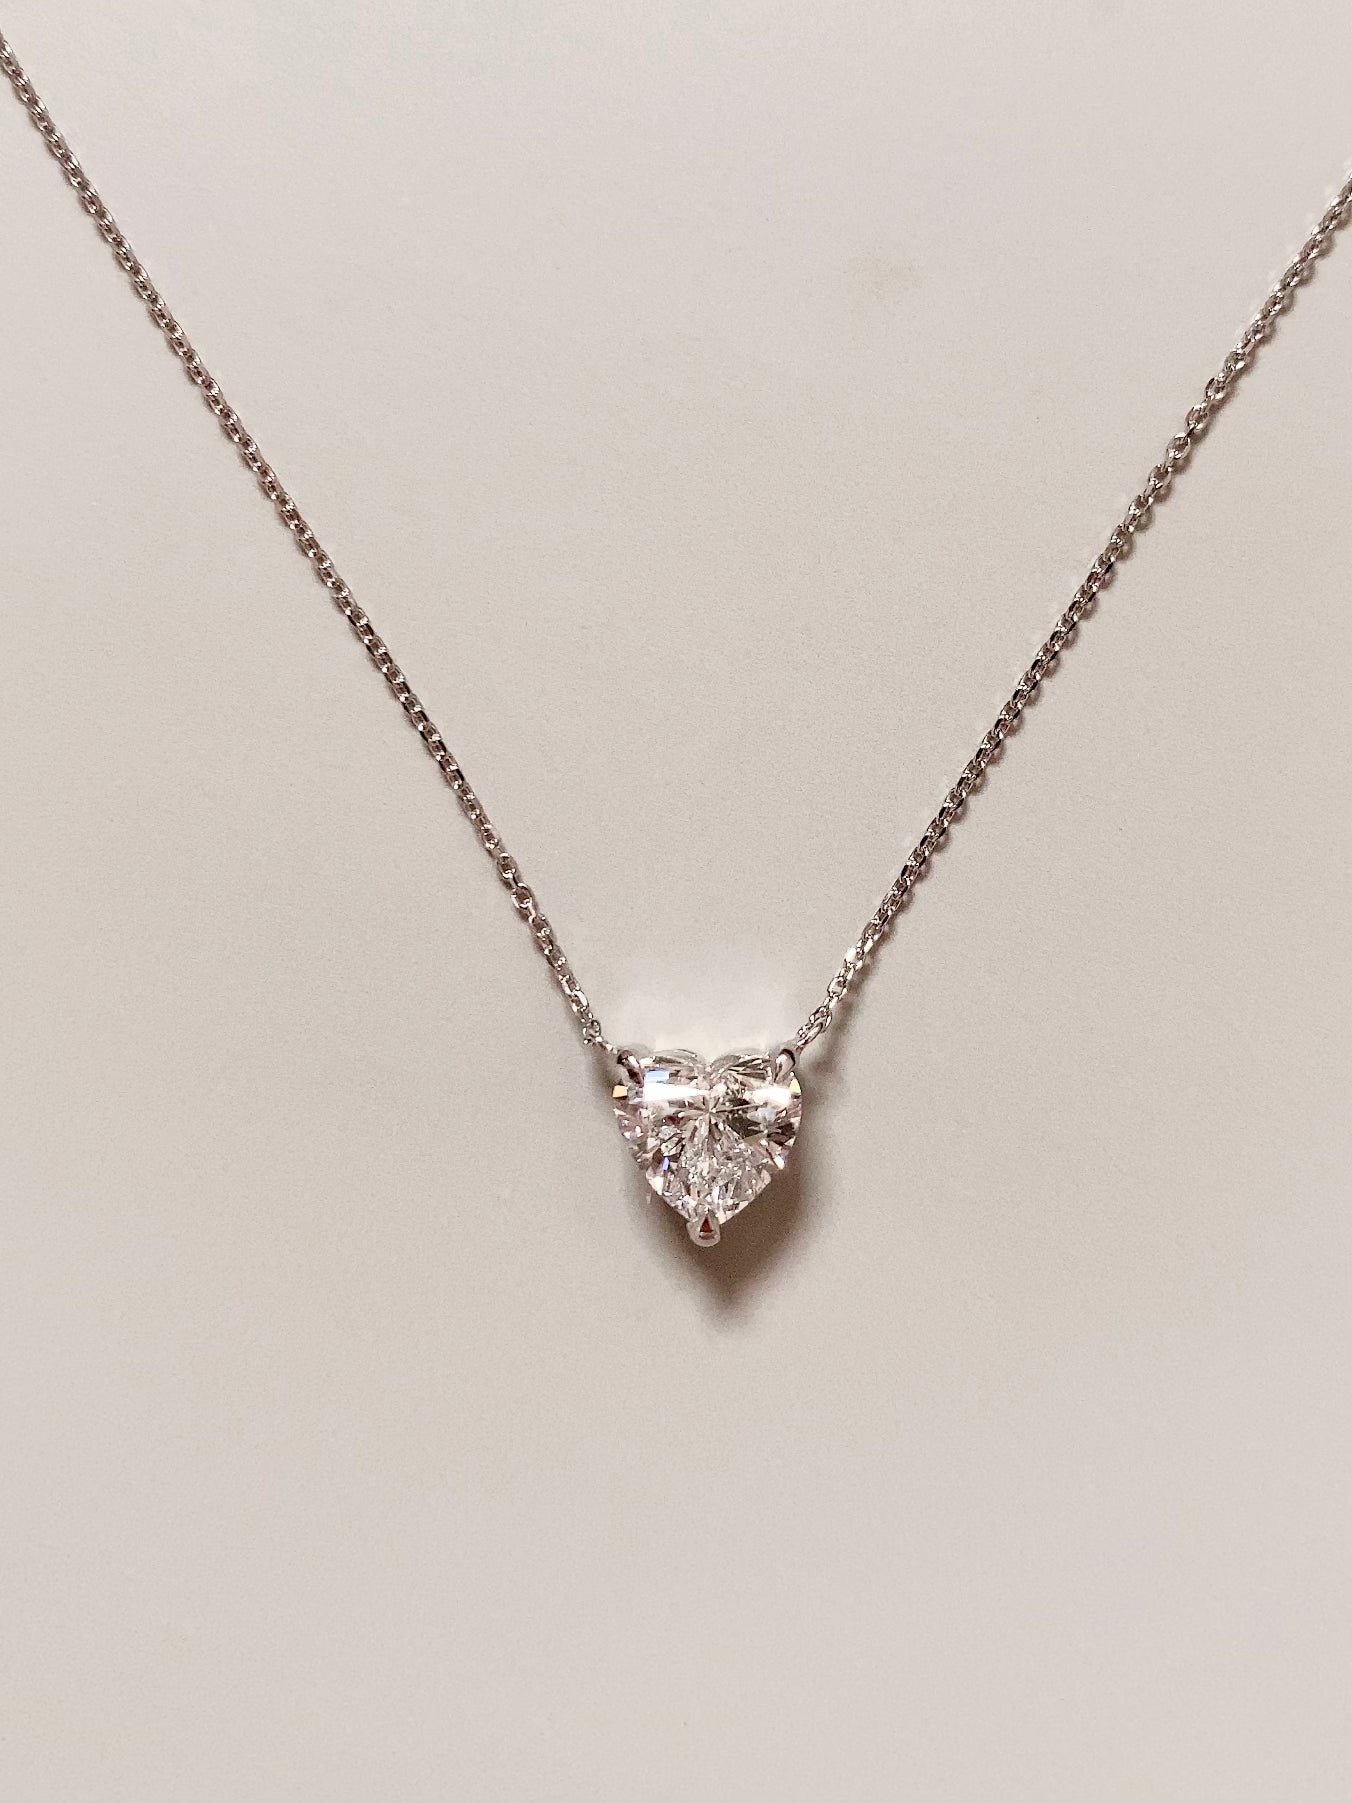 1 carat | Heart Solitaire Necklace | Lab Grown Diamond Necklace